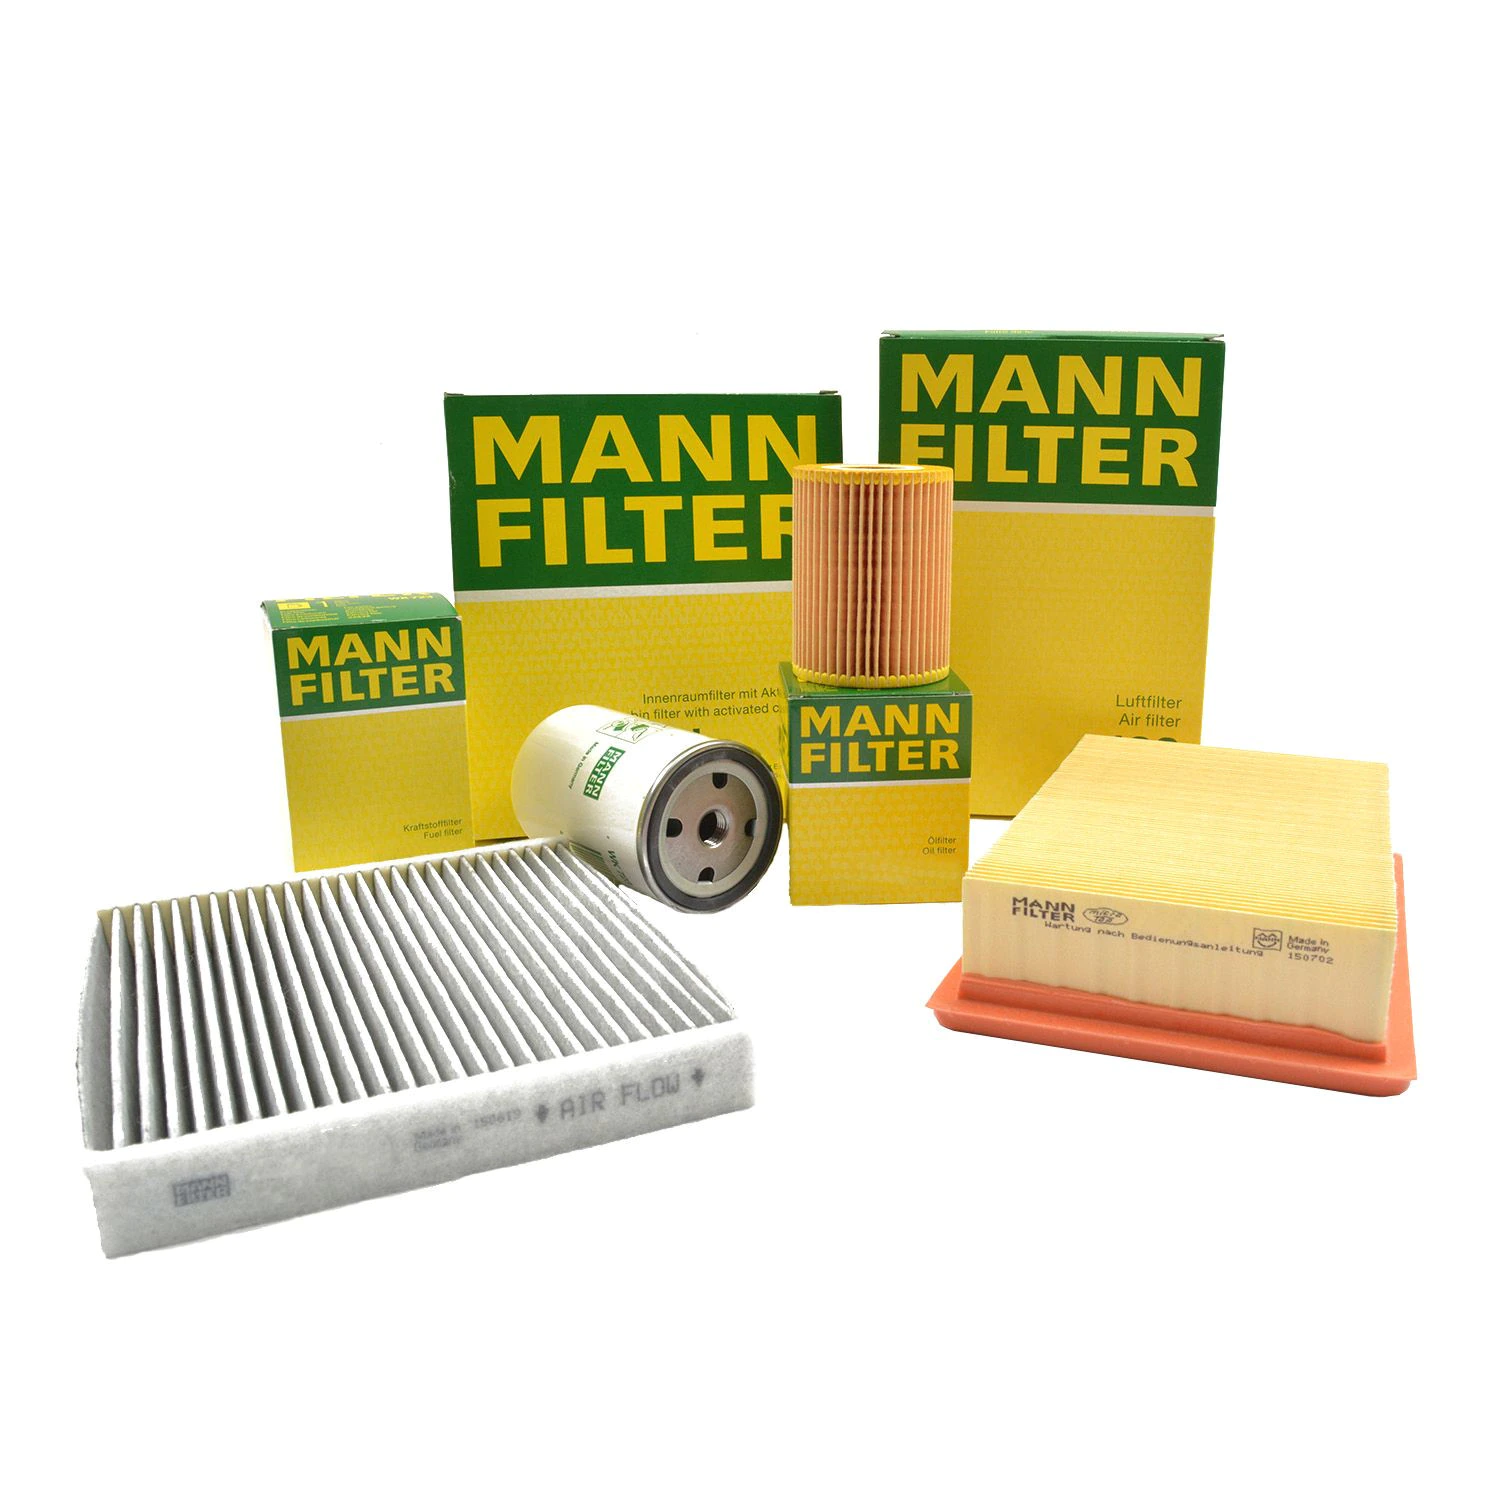 Revizie Opel Insignia A18XER MANN carbon activ Pagina 2/piese-auto-renault/filtre-auto-mann-ufi-mahle/opel-movano - Pachete revizie / filtre Opel Insignia A